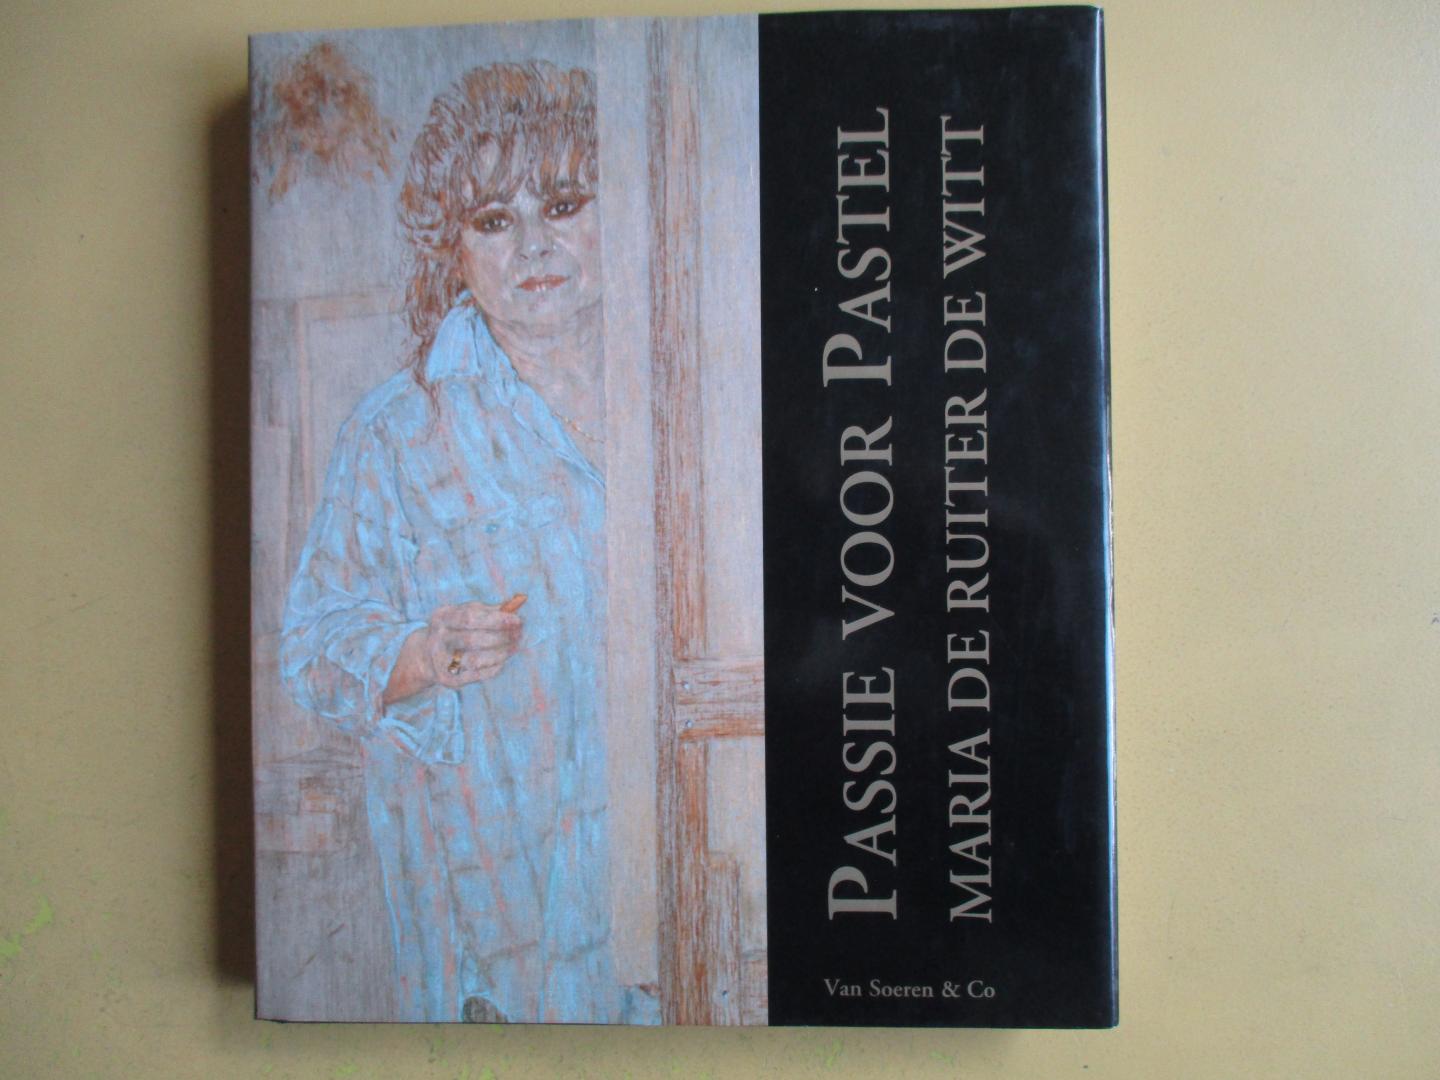 Glerum, Jan Pieter (voorwoord) / Rob Mohlmann (inleiding) - Passie voor pastel /  Passion for pastel  Maria de Ruiter de Witt.